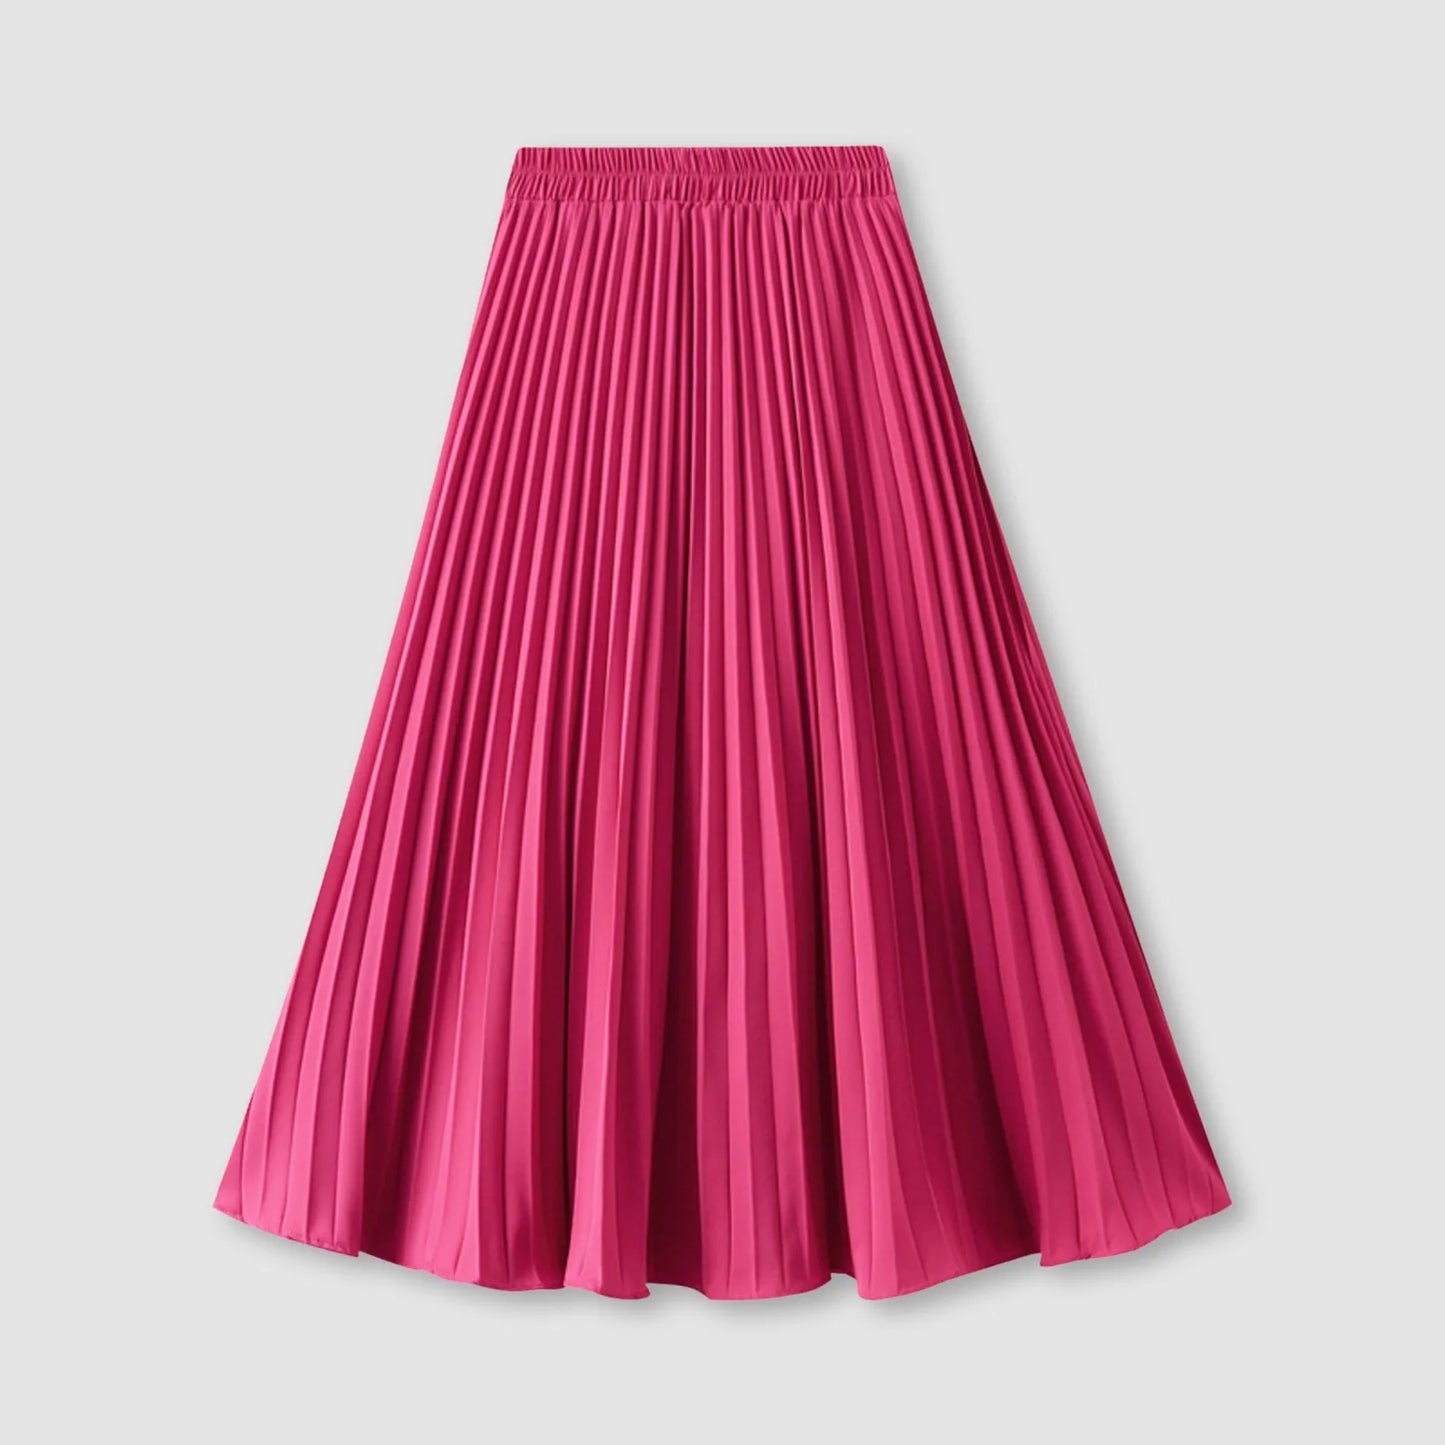 JuliaFashion - Women's Pleated Skirt Spring Summer Elastic Waist Slim Long A Line Skirt Double Layer Chiffon Skirts Solid Midi Pleated Skirt Dress